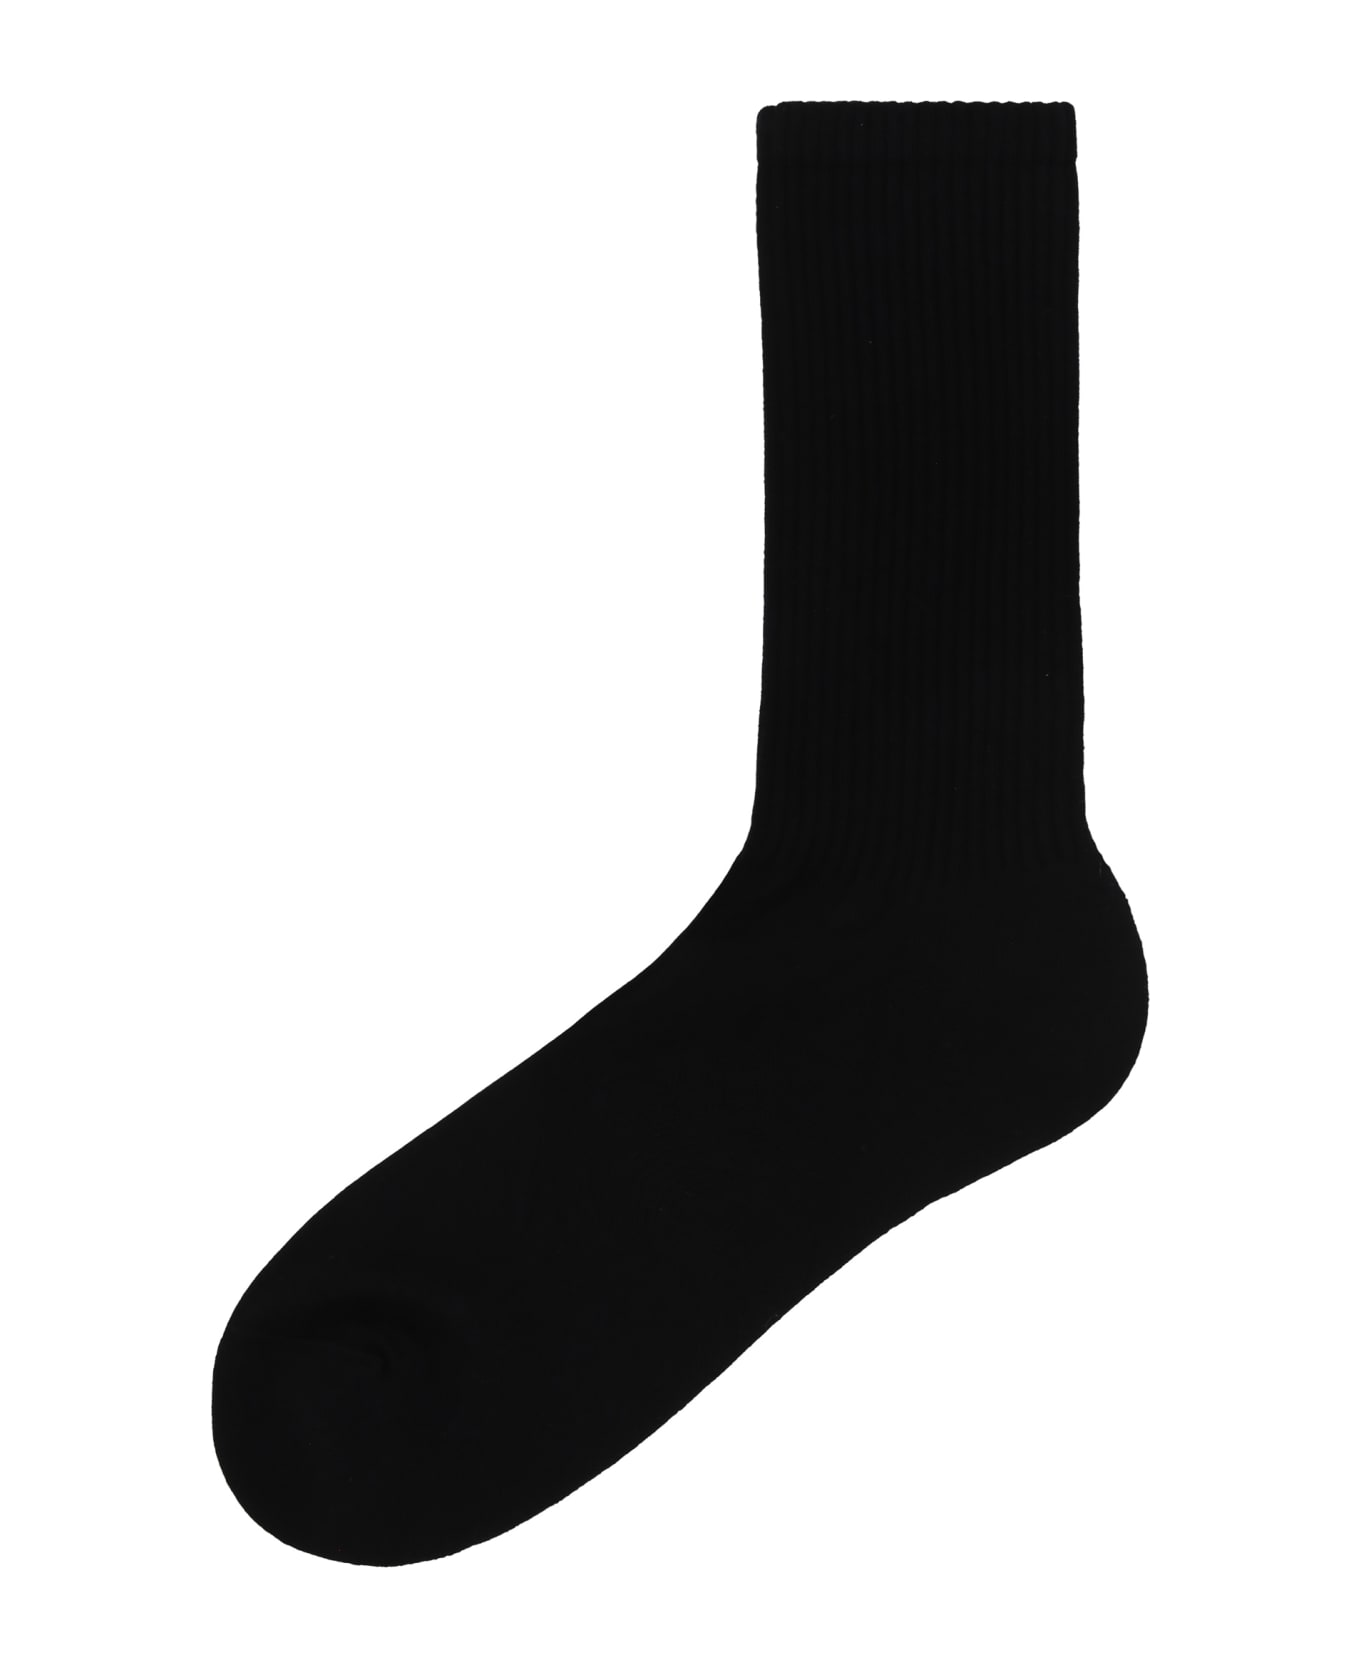 Off-White Big Logo Bksh Mid Calf Socks - Black White